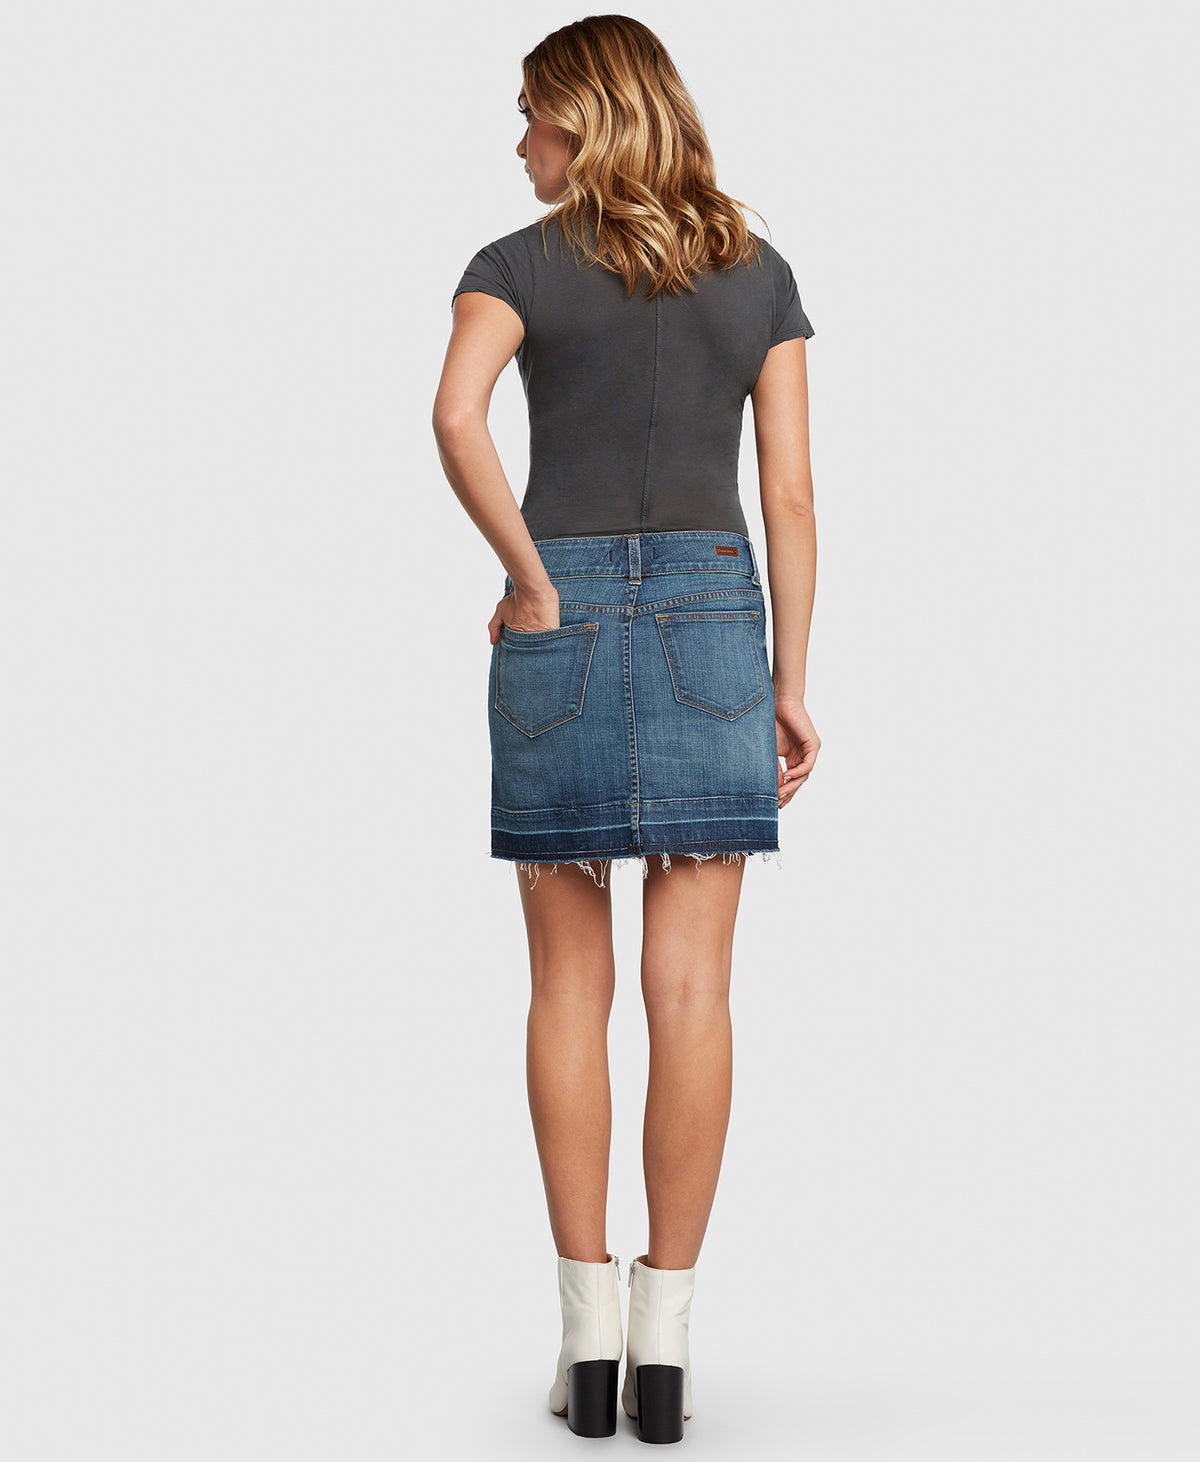 Principle denim skirt with double button waistband back